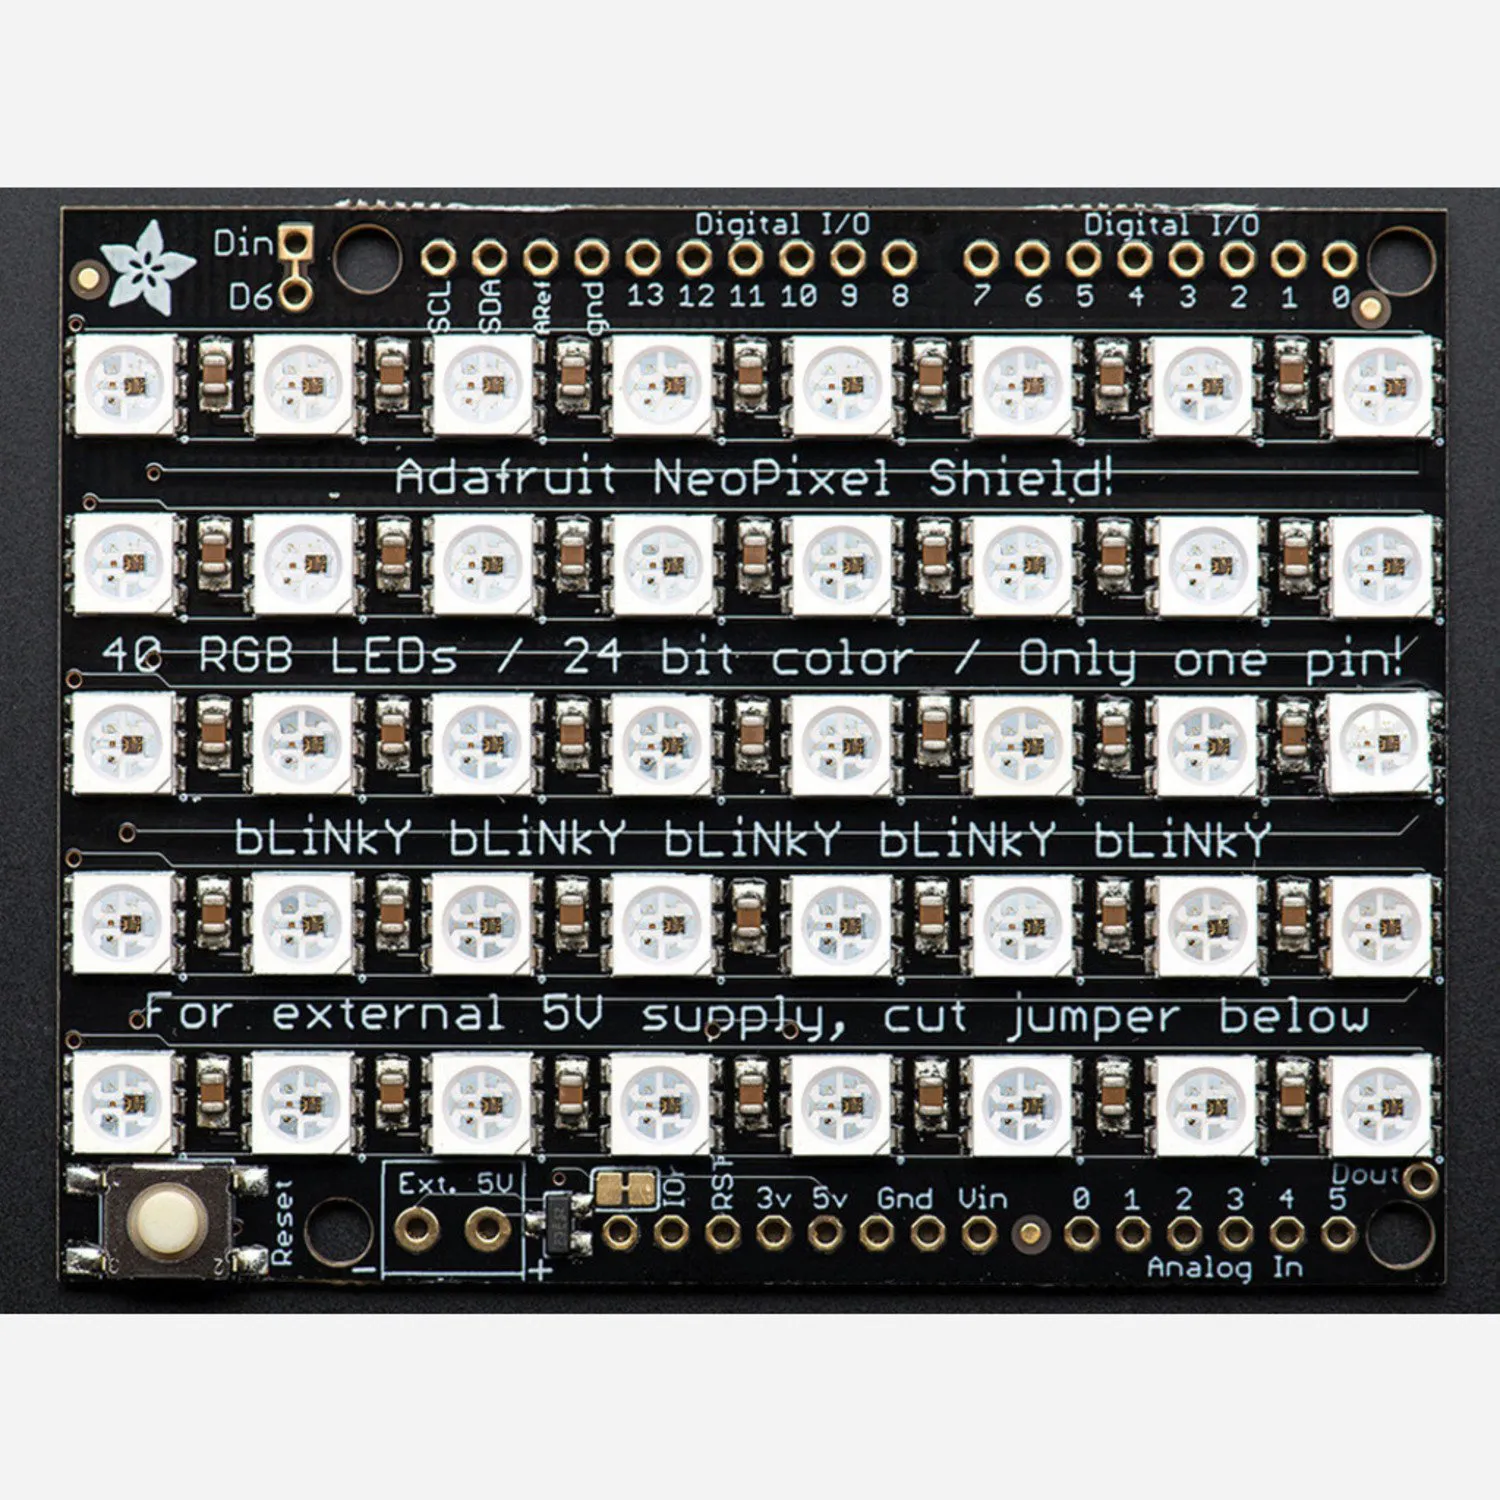 Photo of Adafruit NeoPixel Shield for Arduino - 40 RGB LED Pixel Matrix